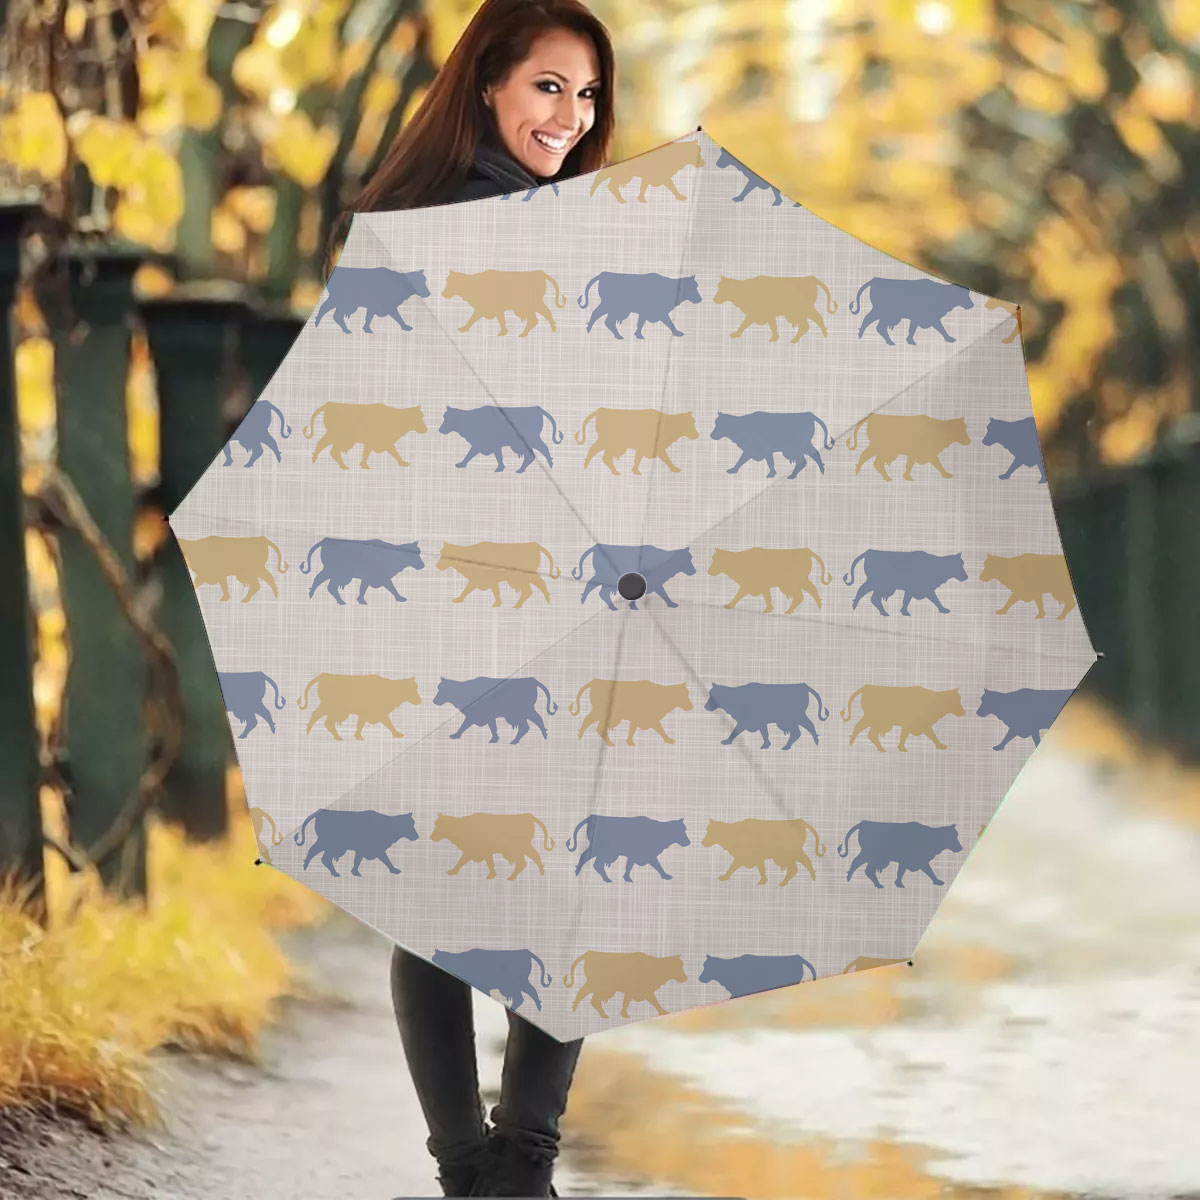 Cow Silhouette Pattern Umbrella